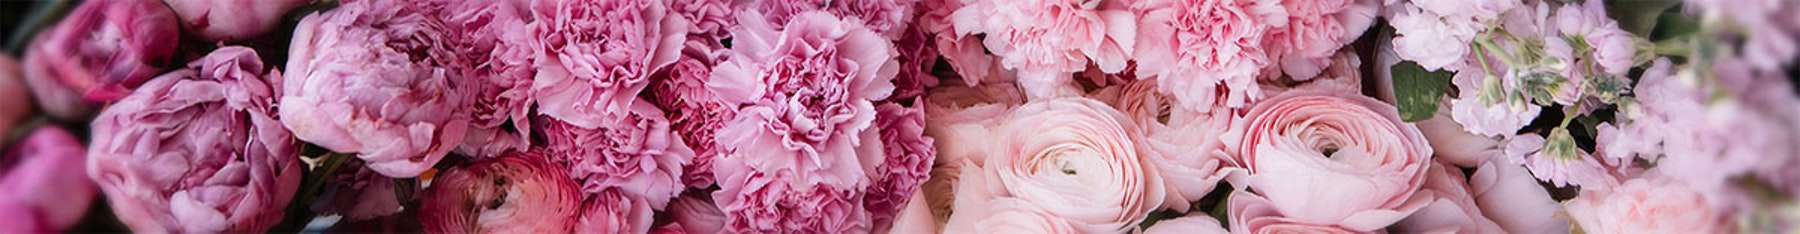 Wedding Inquiry - The Blossom Shop - Charlotte, NC - The Blossom Shop ...